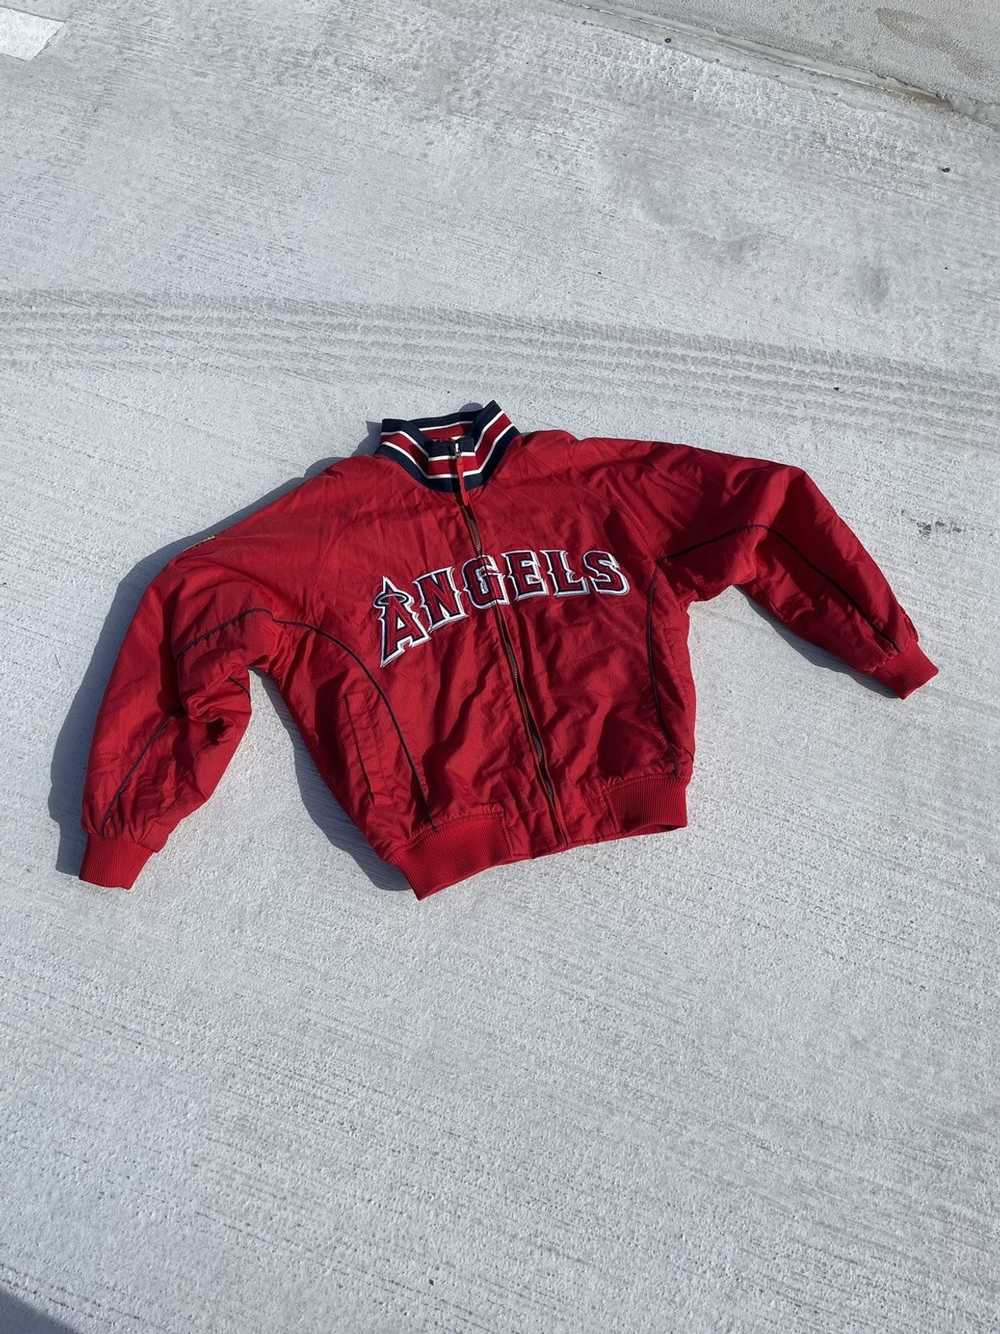 Original MAJESTIC MLB ANGELS T-Shirt size XL., Men's Fashion, Tops